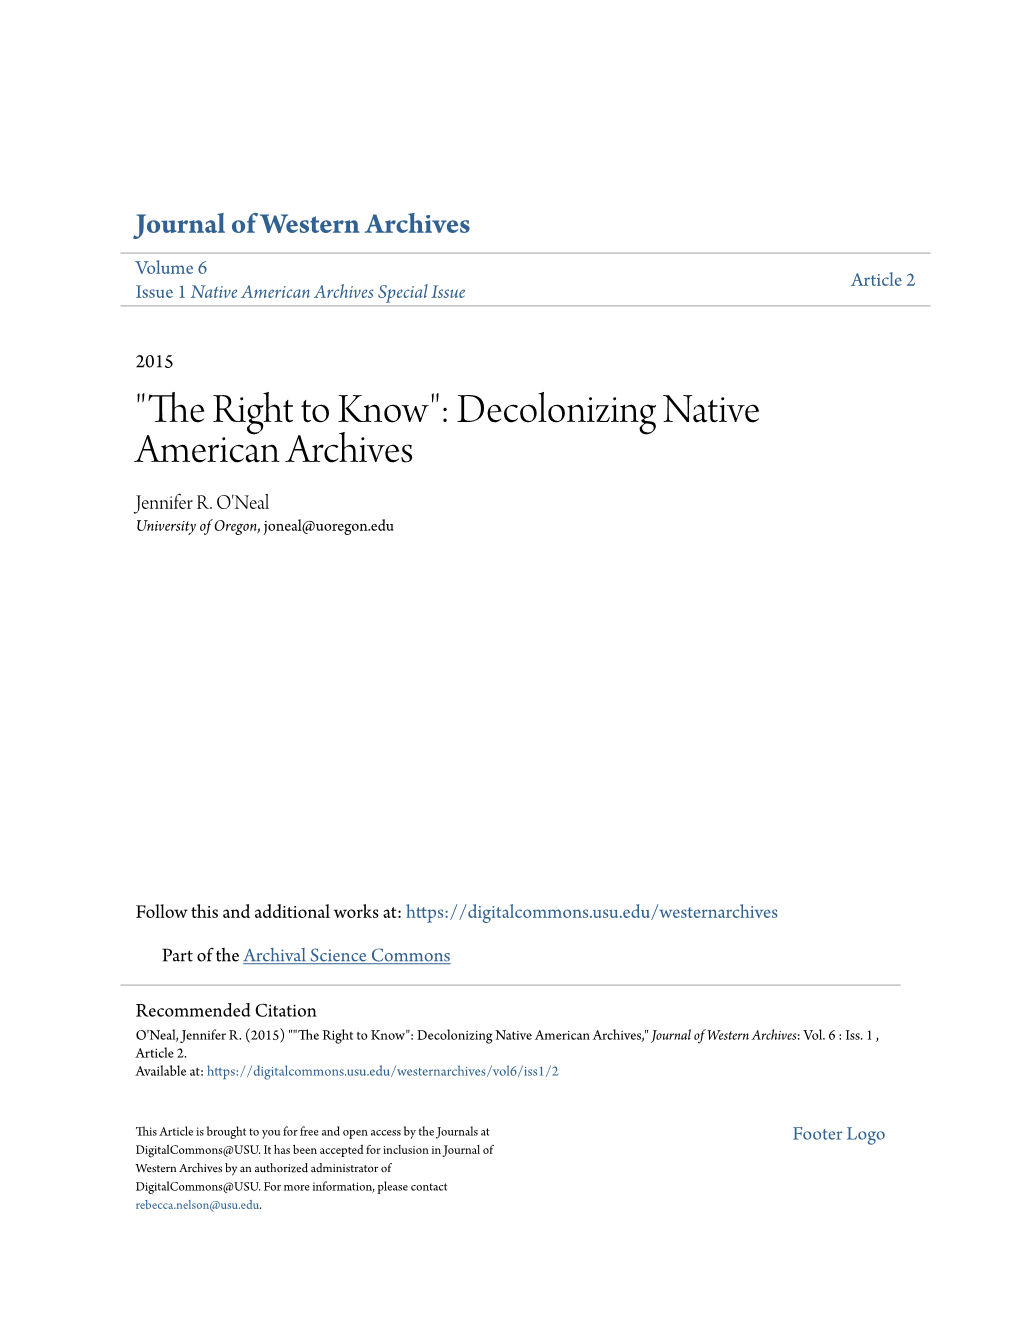 Decolonizing Native American Archives Jennifer R